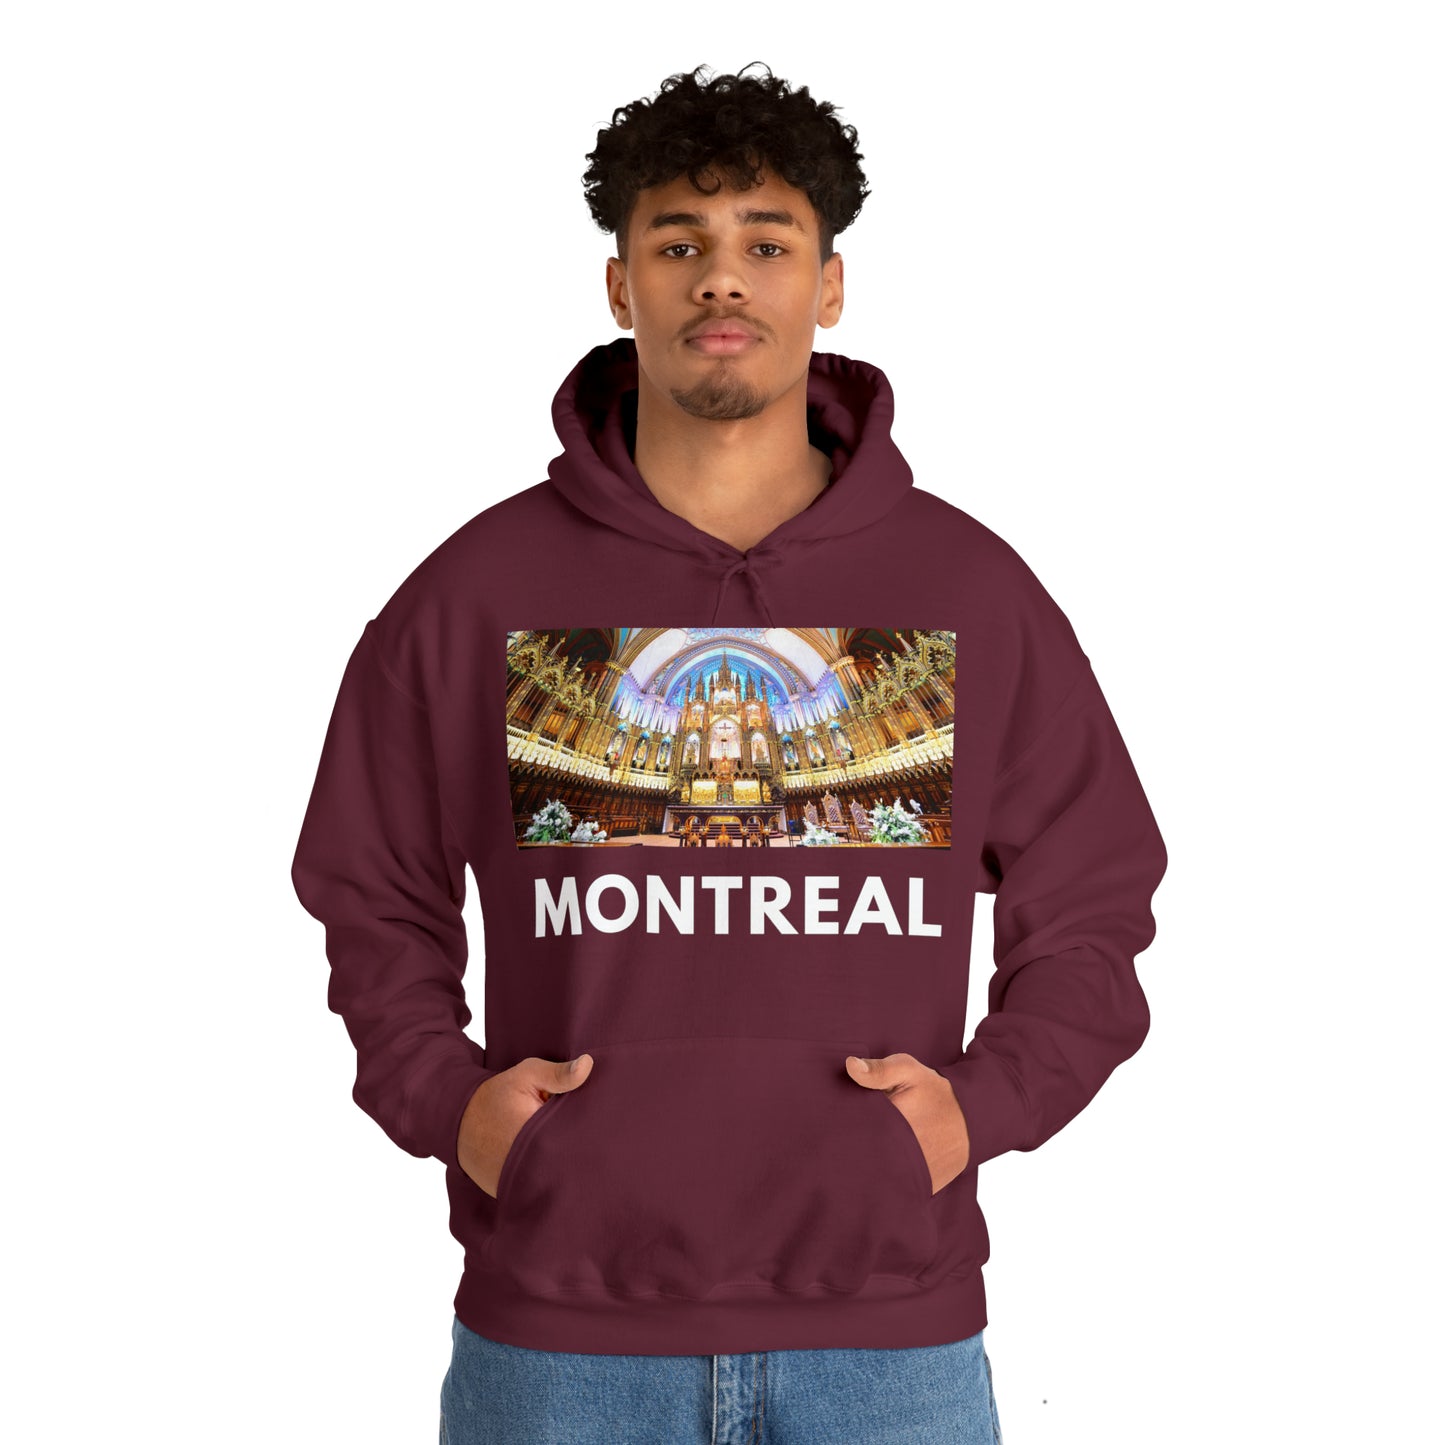   Montreal Hoodie: Notre Dame from HoodySZN.com